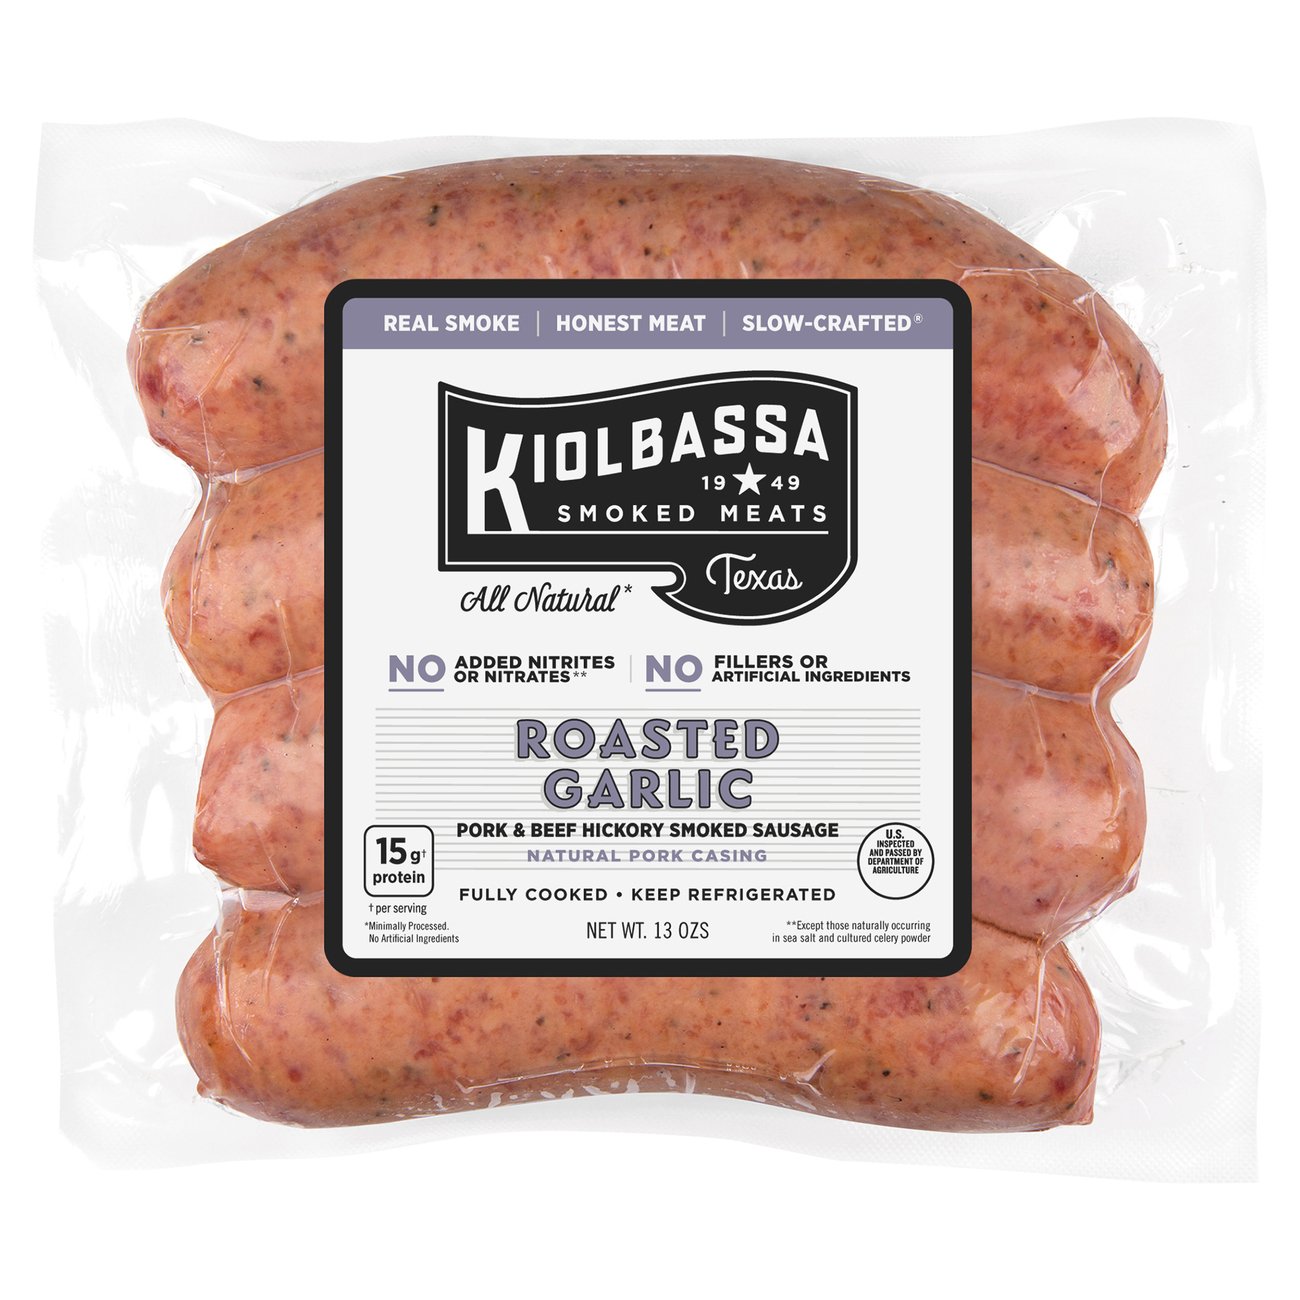 Kiolbassa All Natural Premium Roasted Garlic Sausage Links Shop Sausage At H E B,Best Chuck Steak Recipes